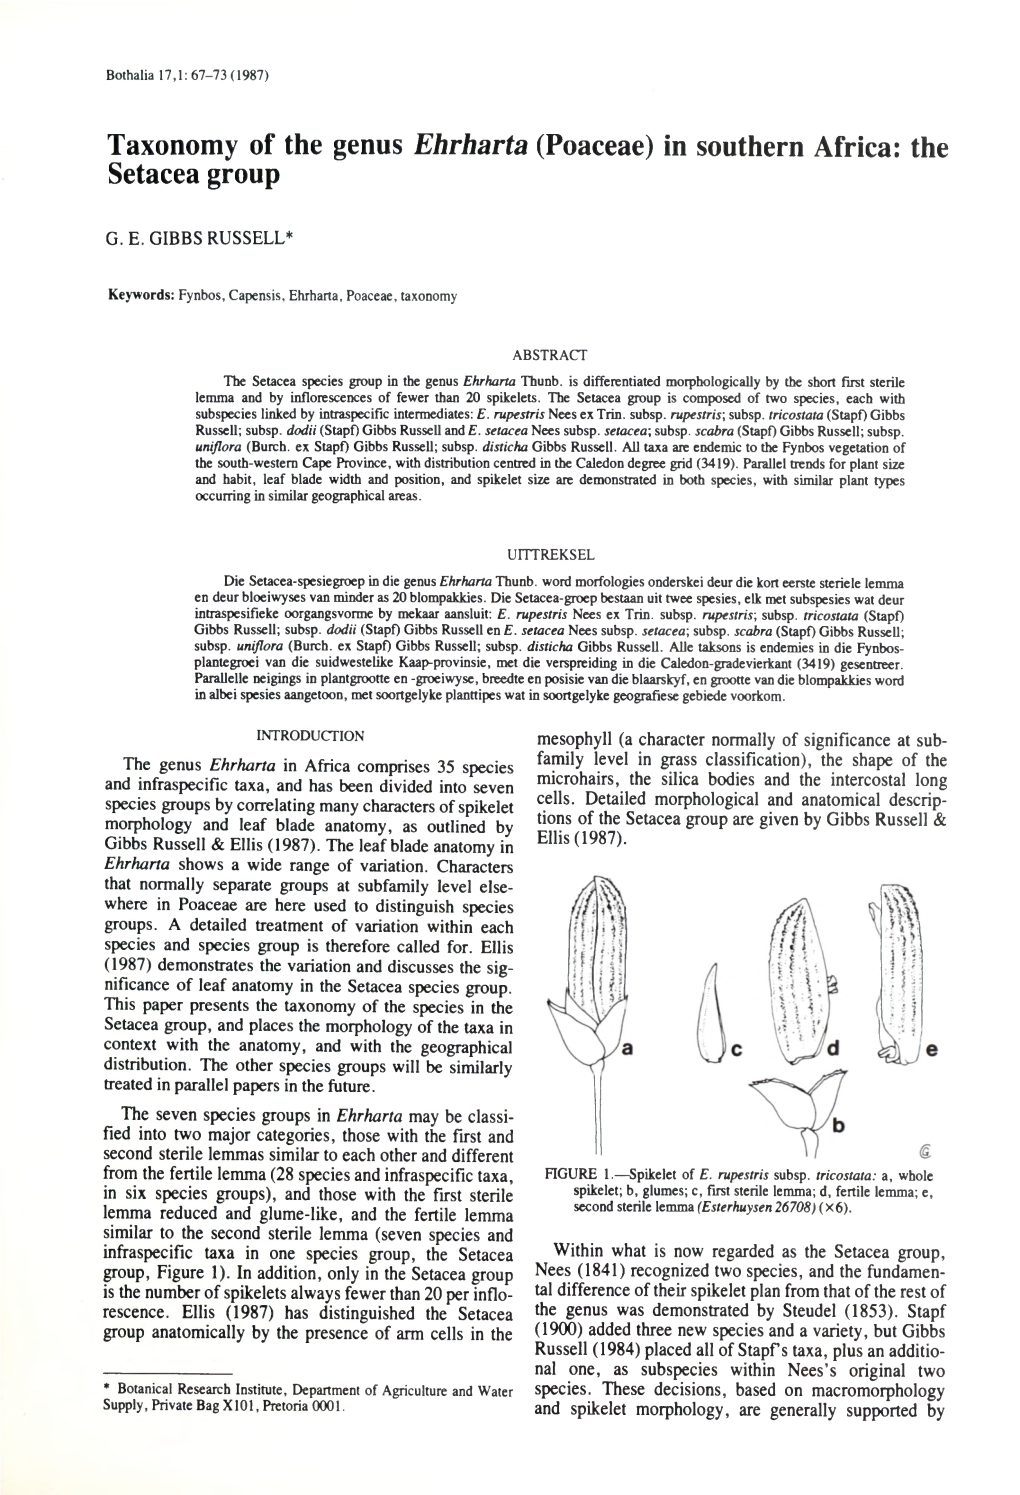 Taxonomy of the Genus Ehrharta (Poaceae) in Southern Africa: the Setacea Group